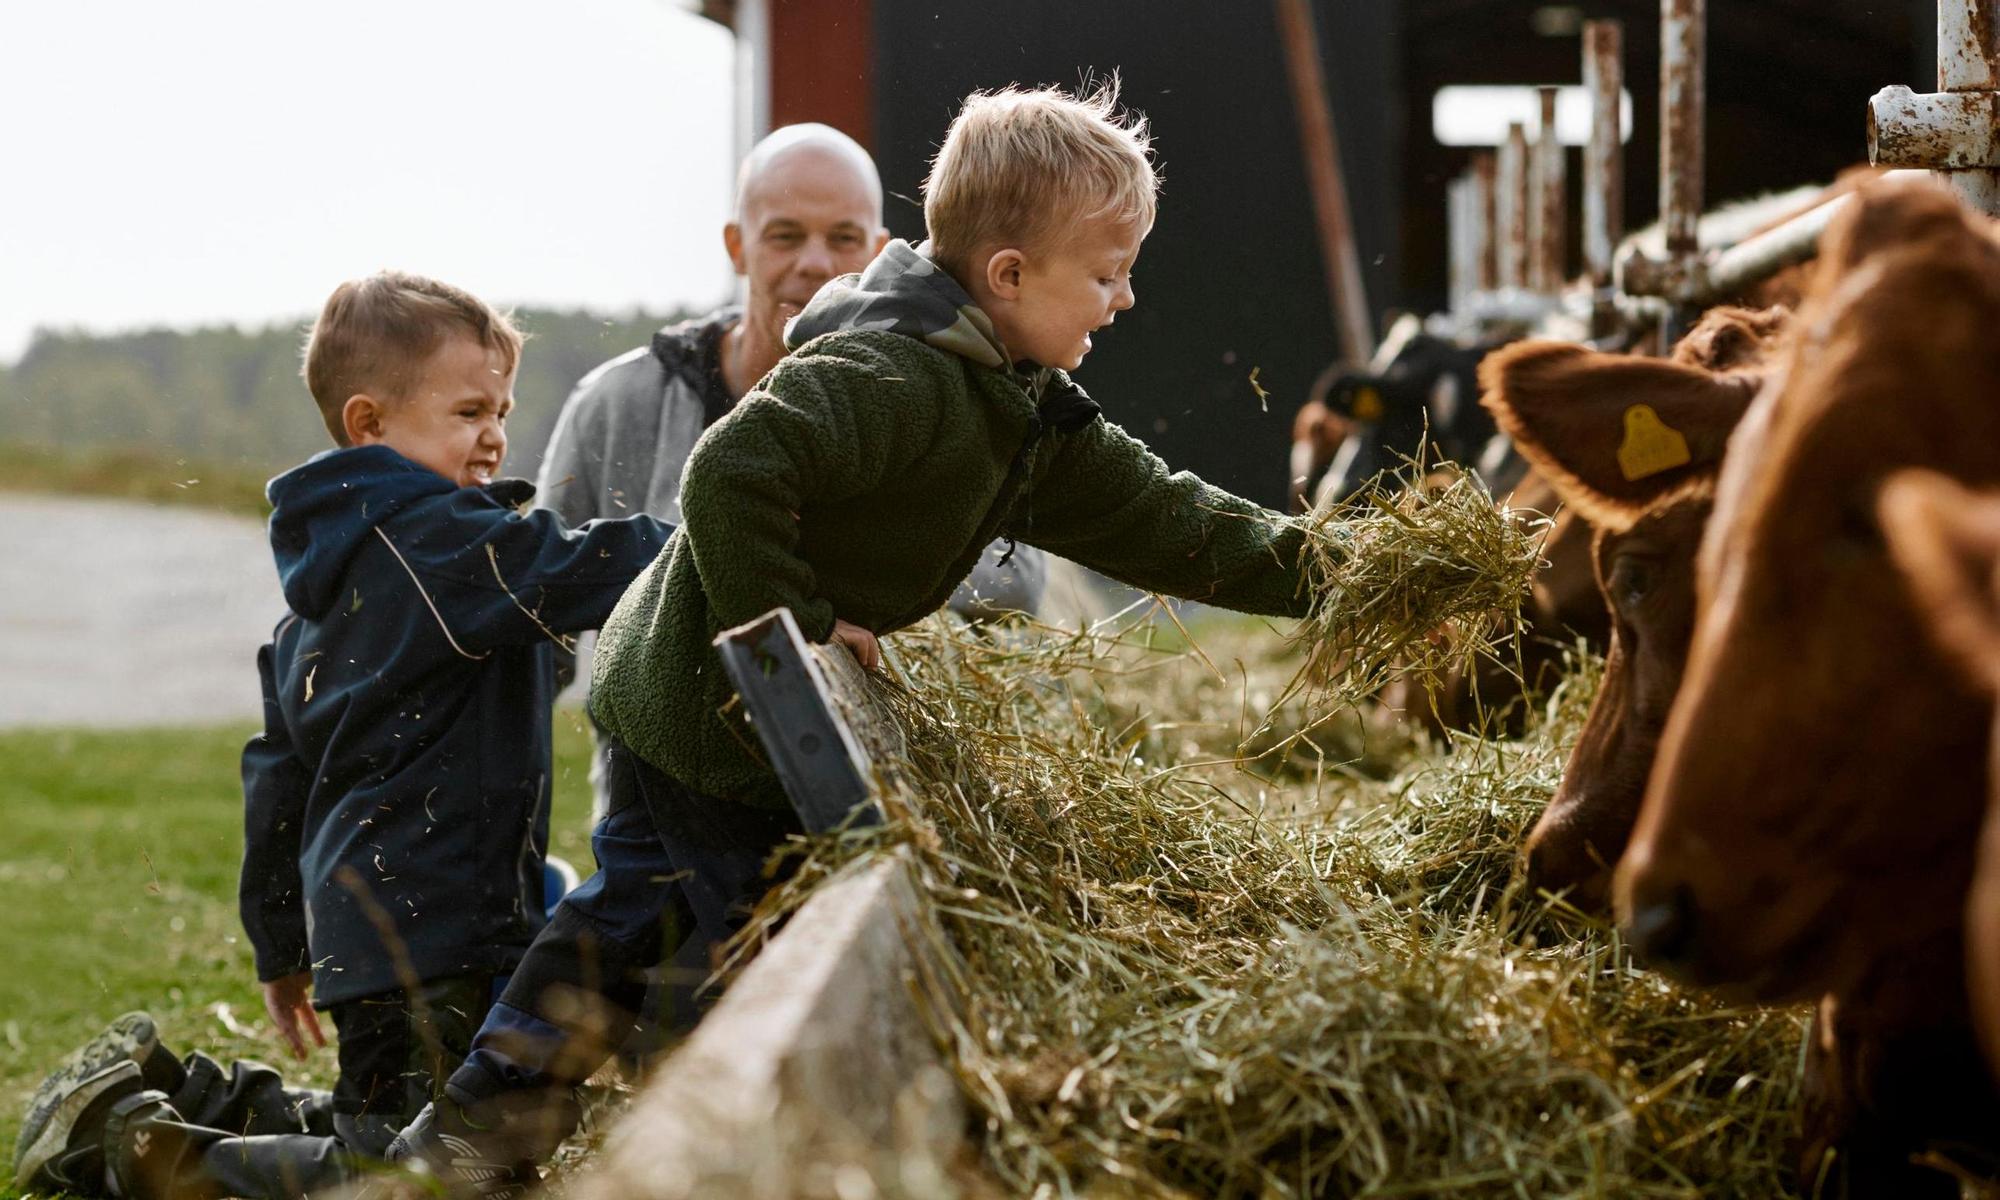 Kids feeding the cows